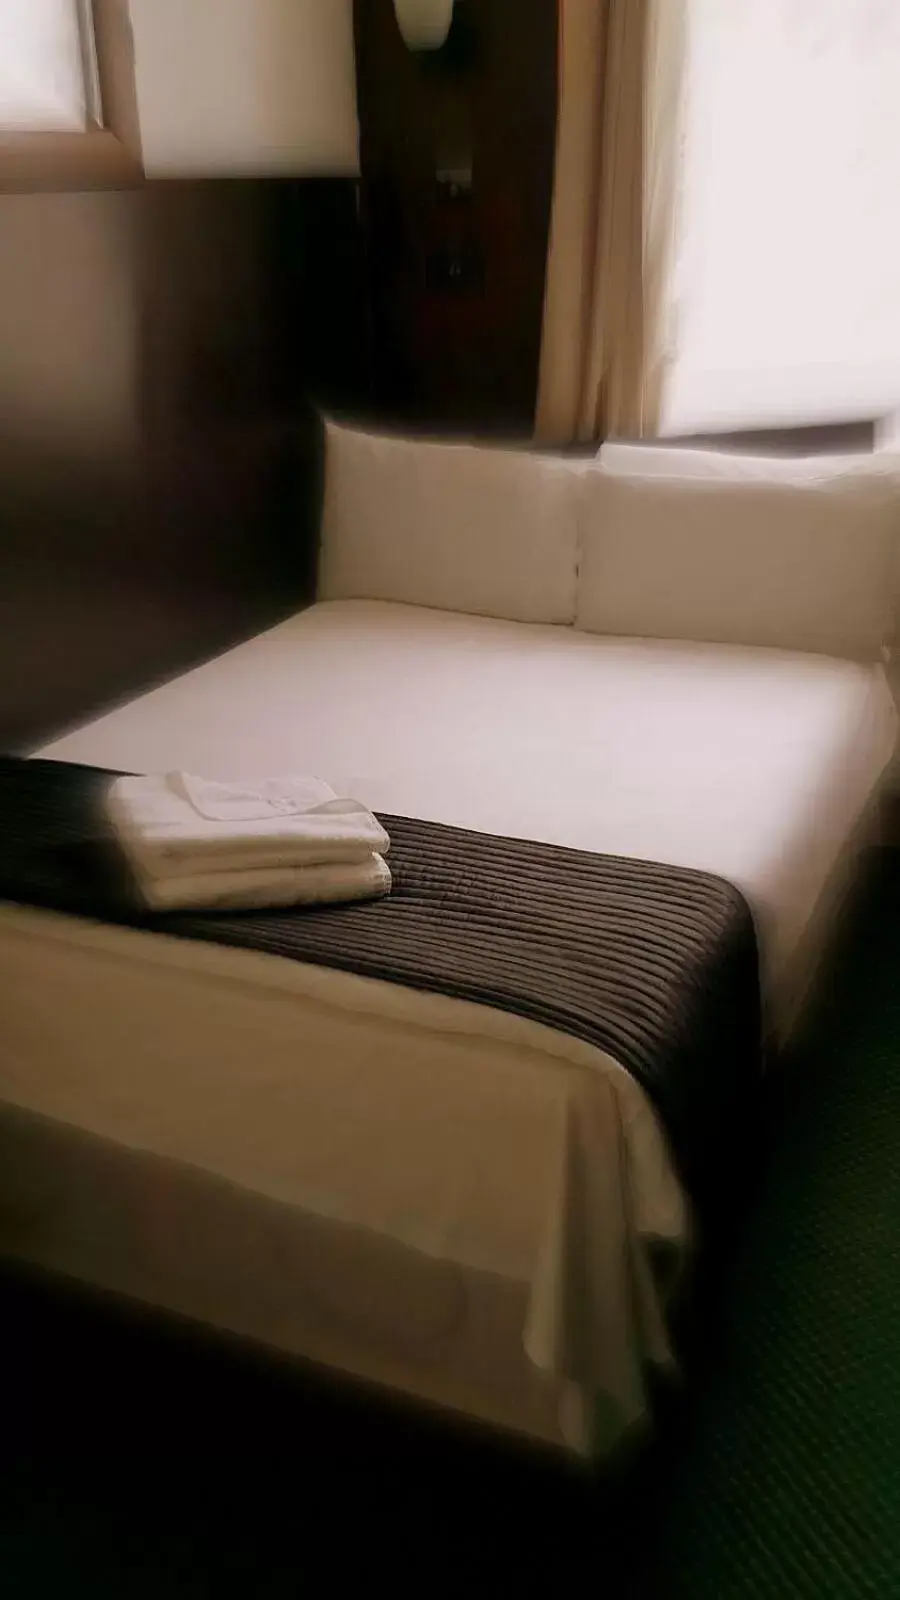 Bathroom, Bed in Plaza London Hotel